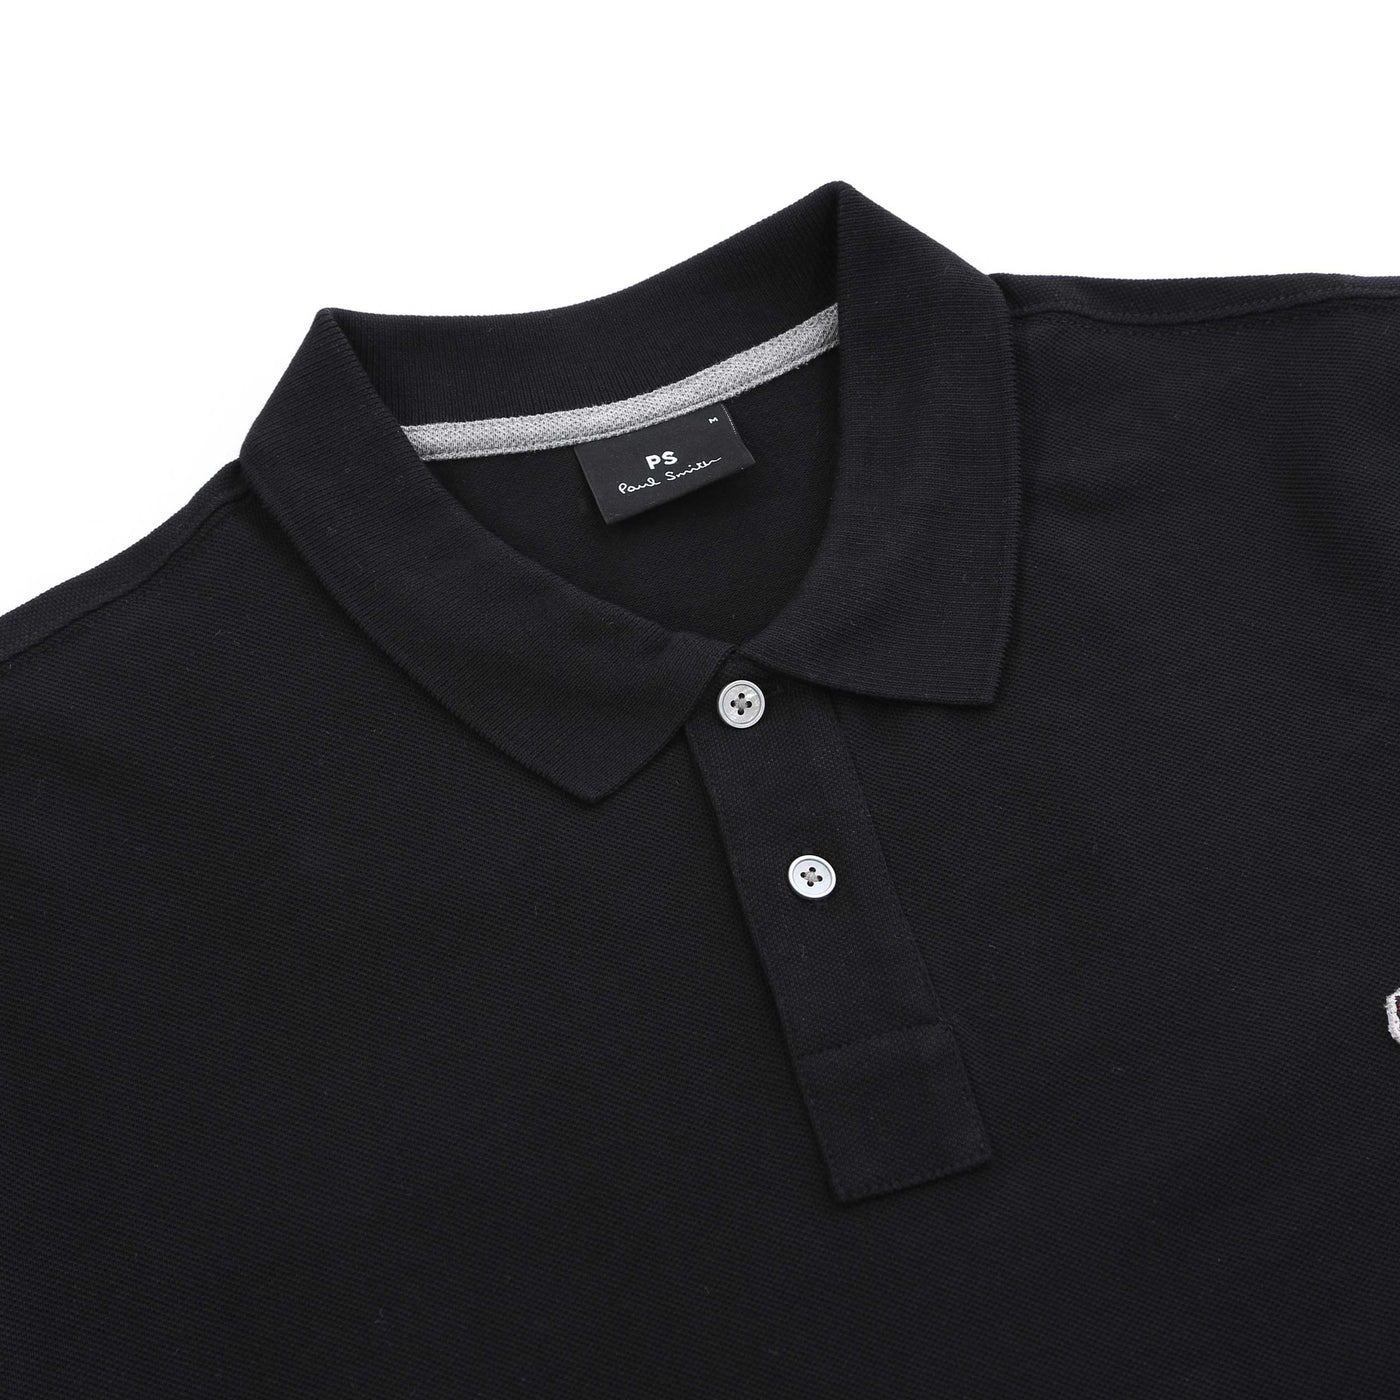 Paul Smith Zebra Polo Shirt in Black Collar